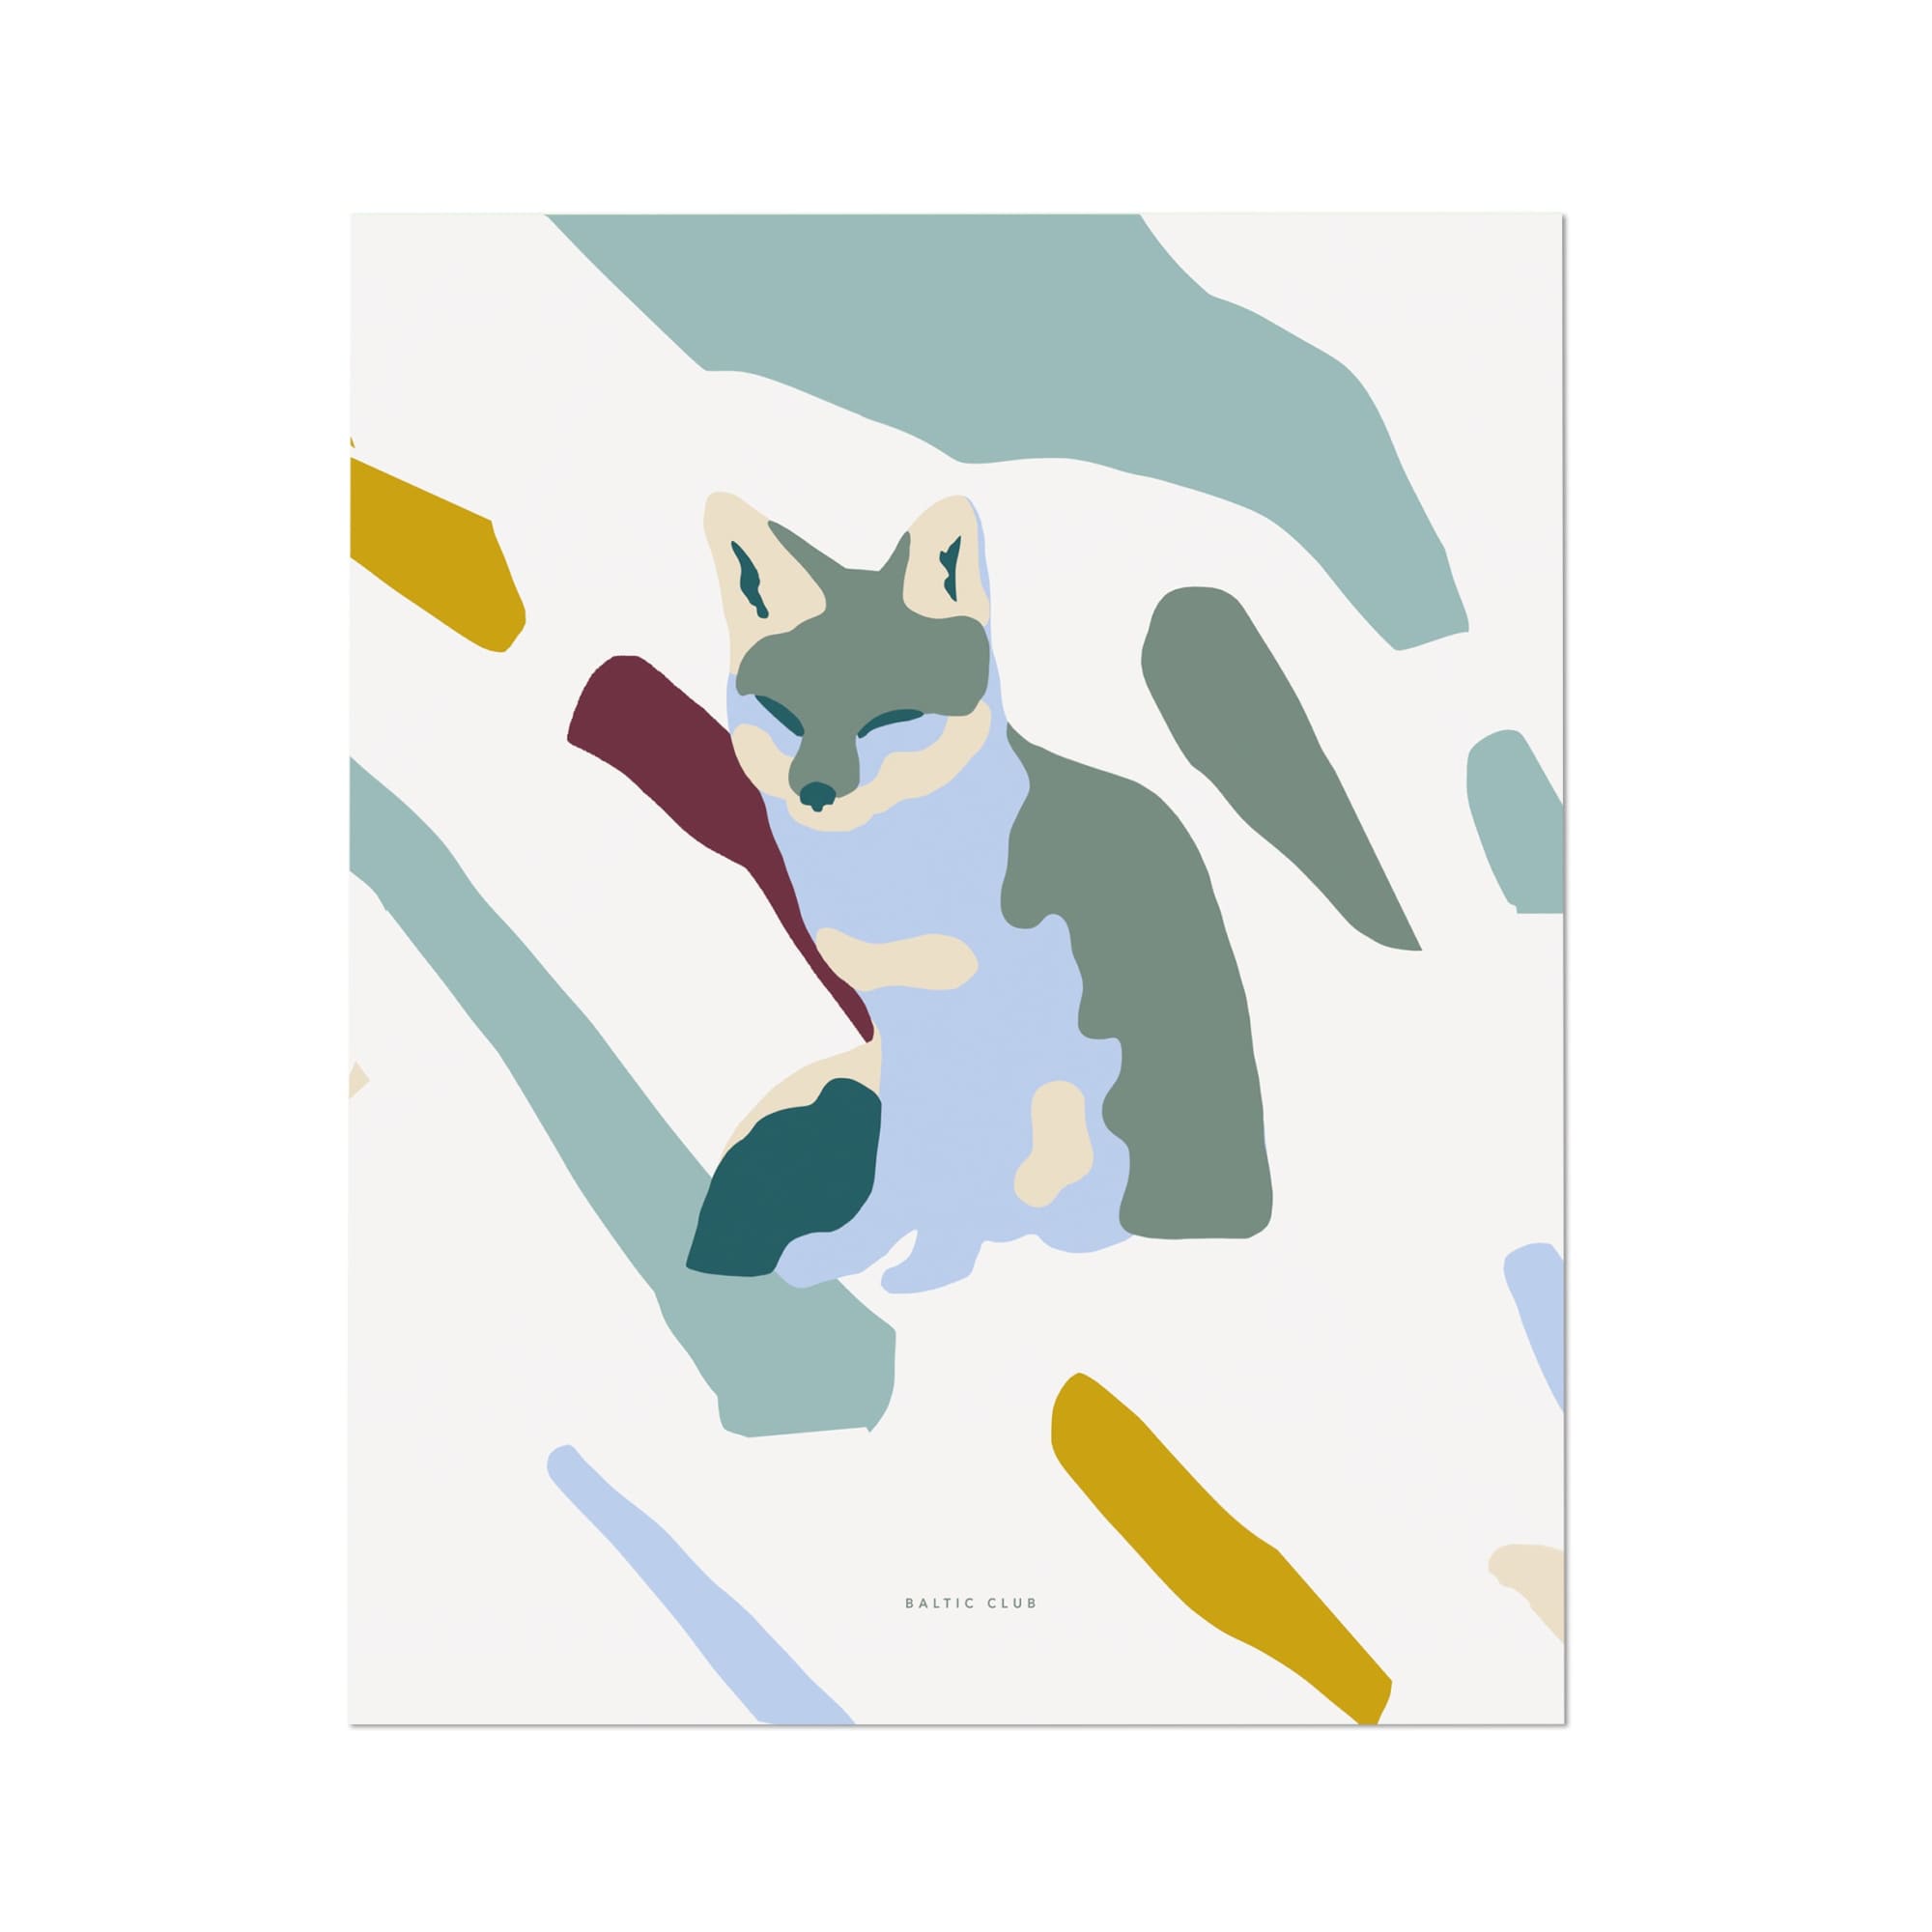 Kit Fox Art Print | 8 x 10 | The Baltic Club